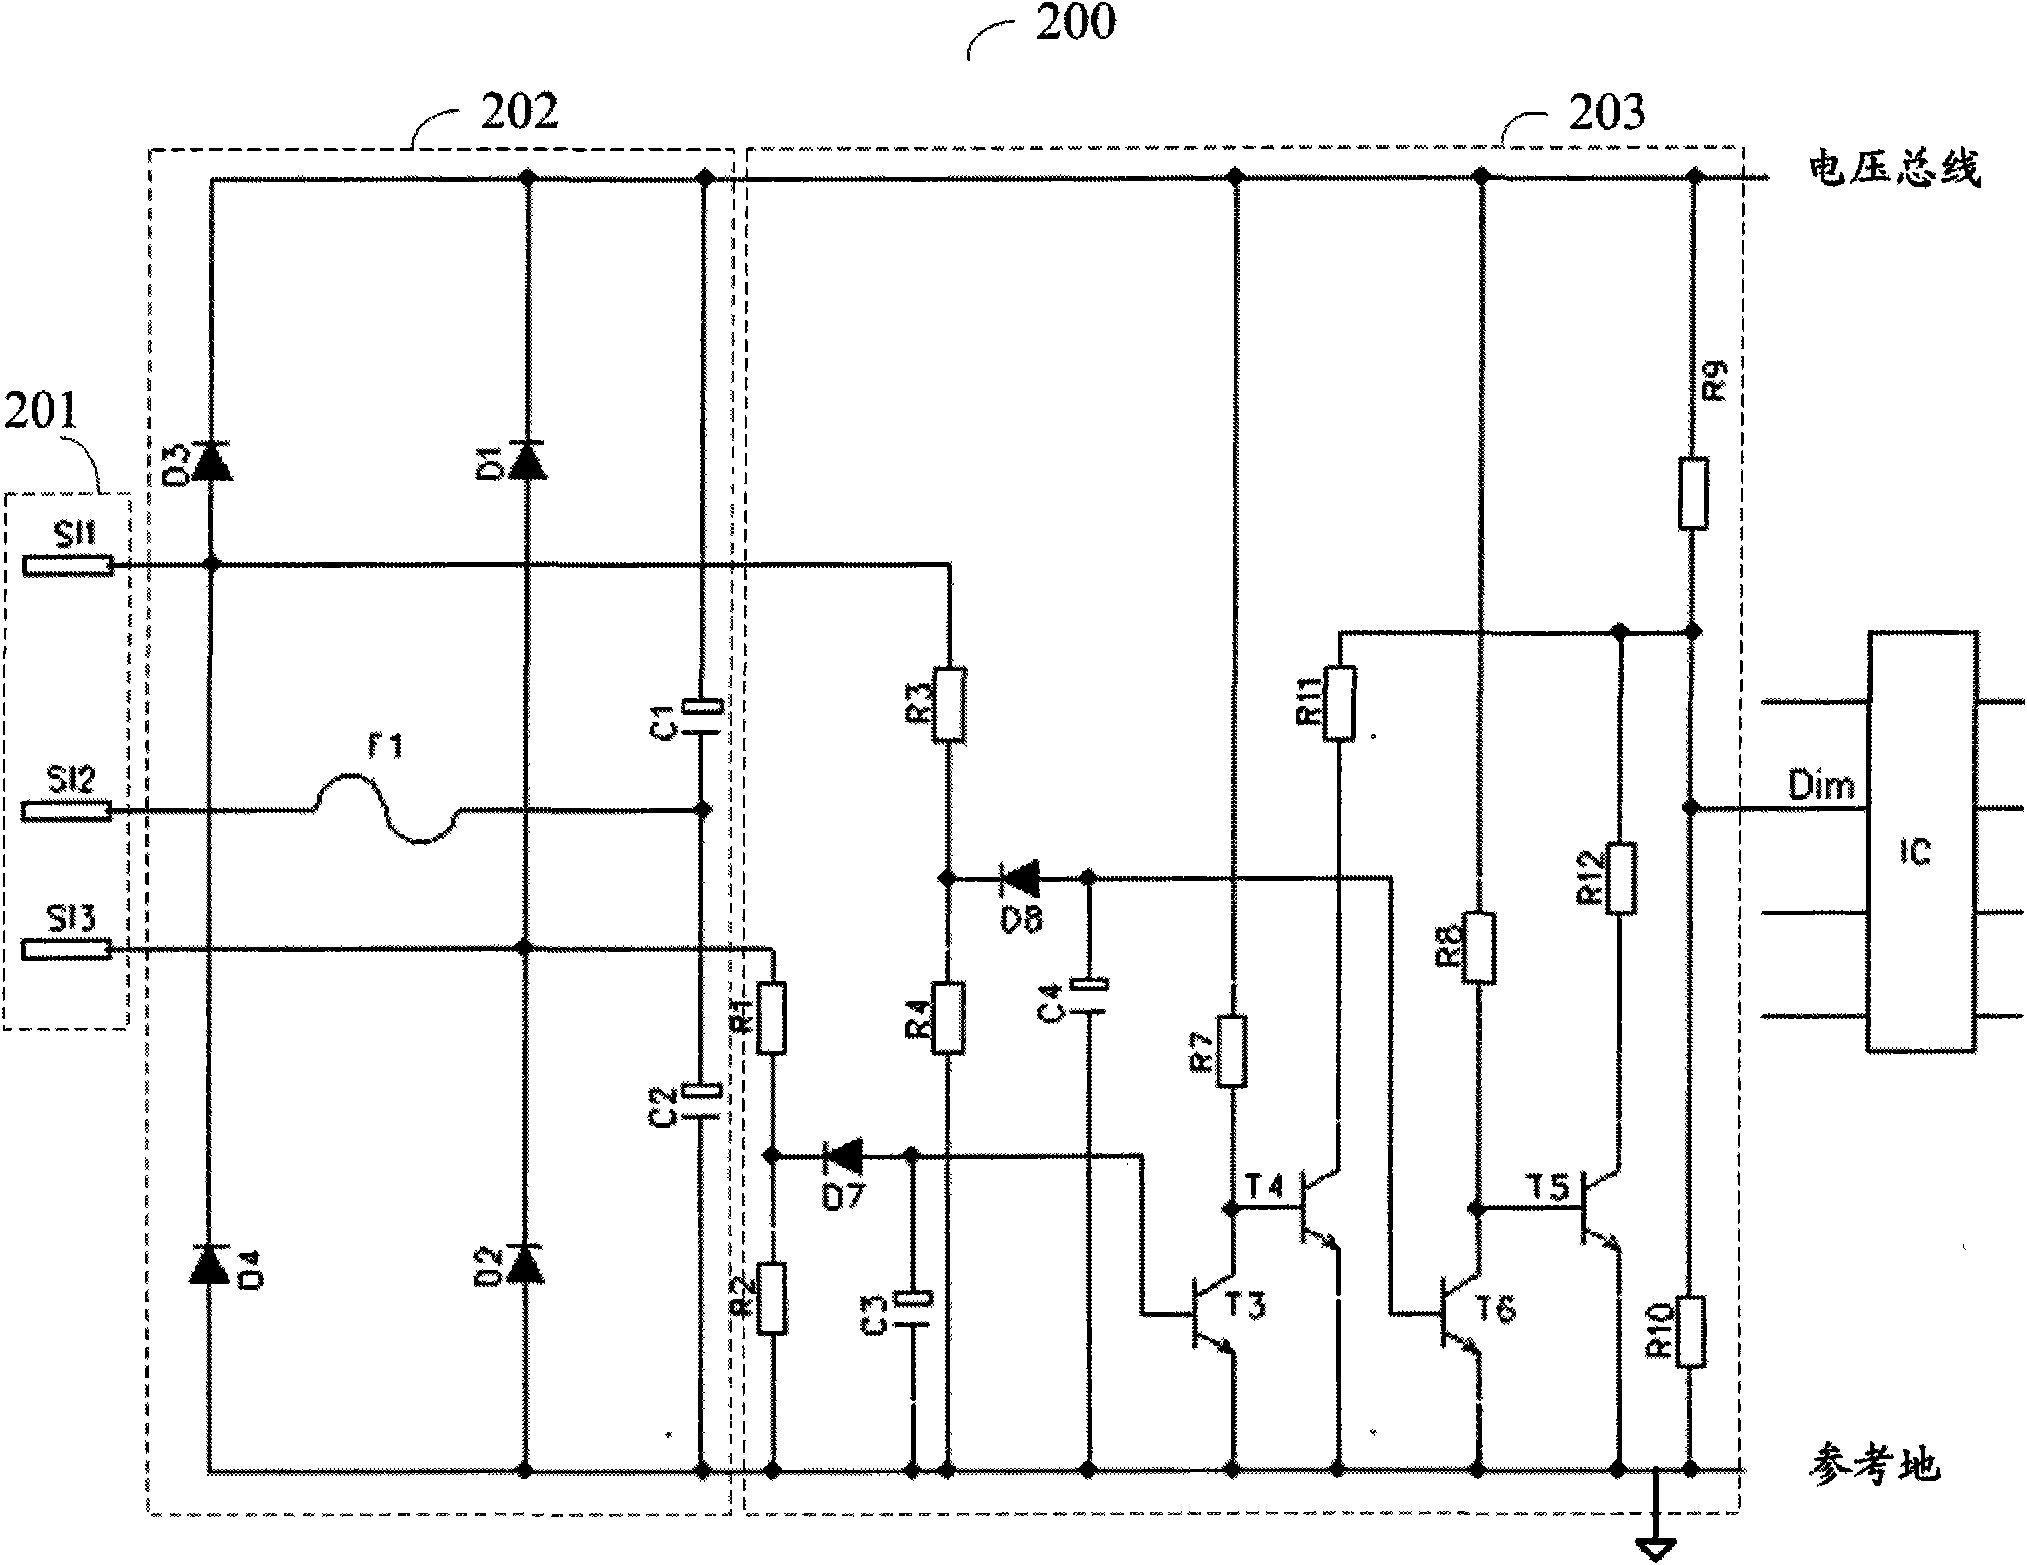 Operating resonant load circuit, dimming circuit and dimming method